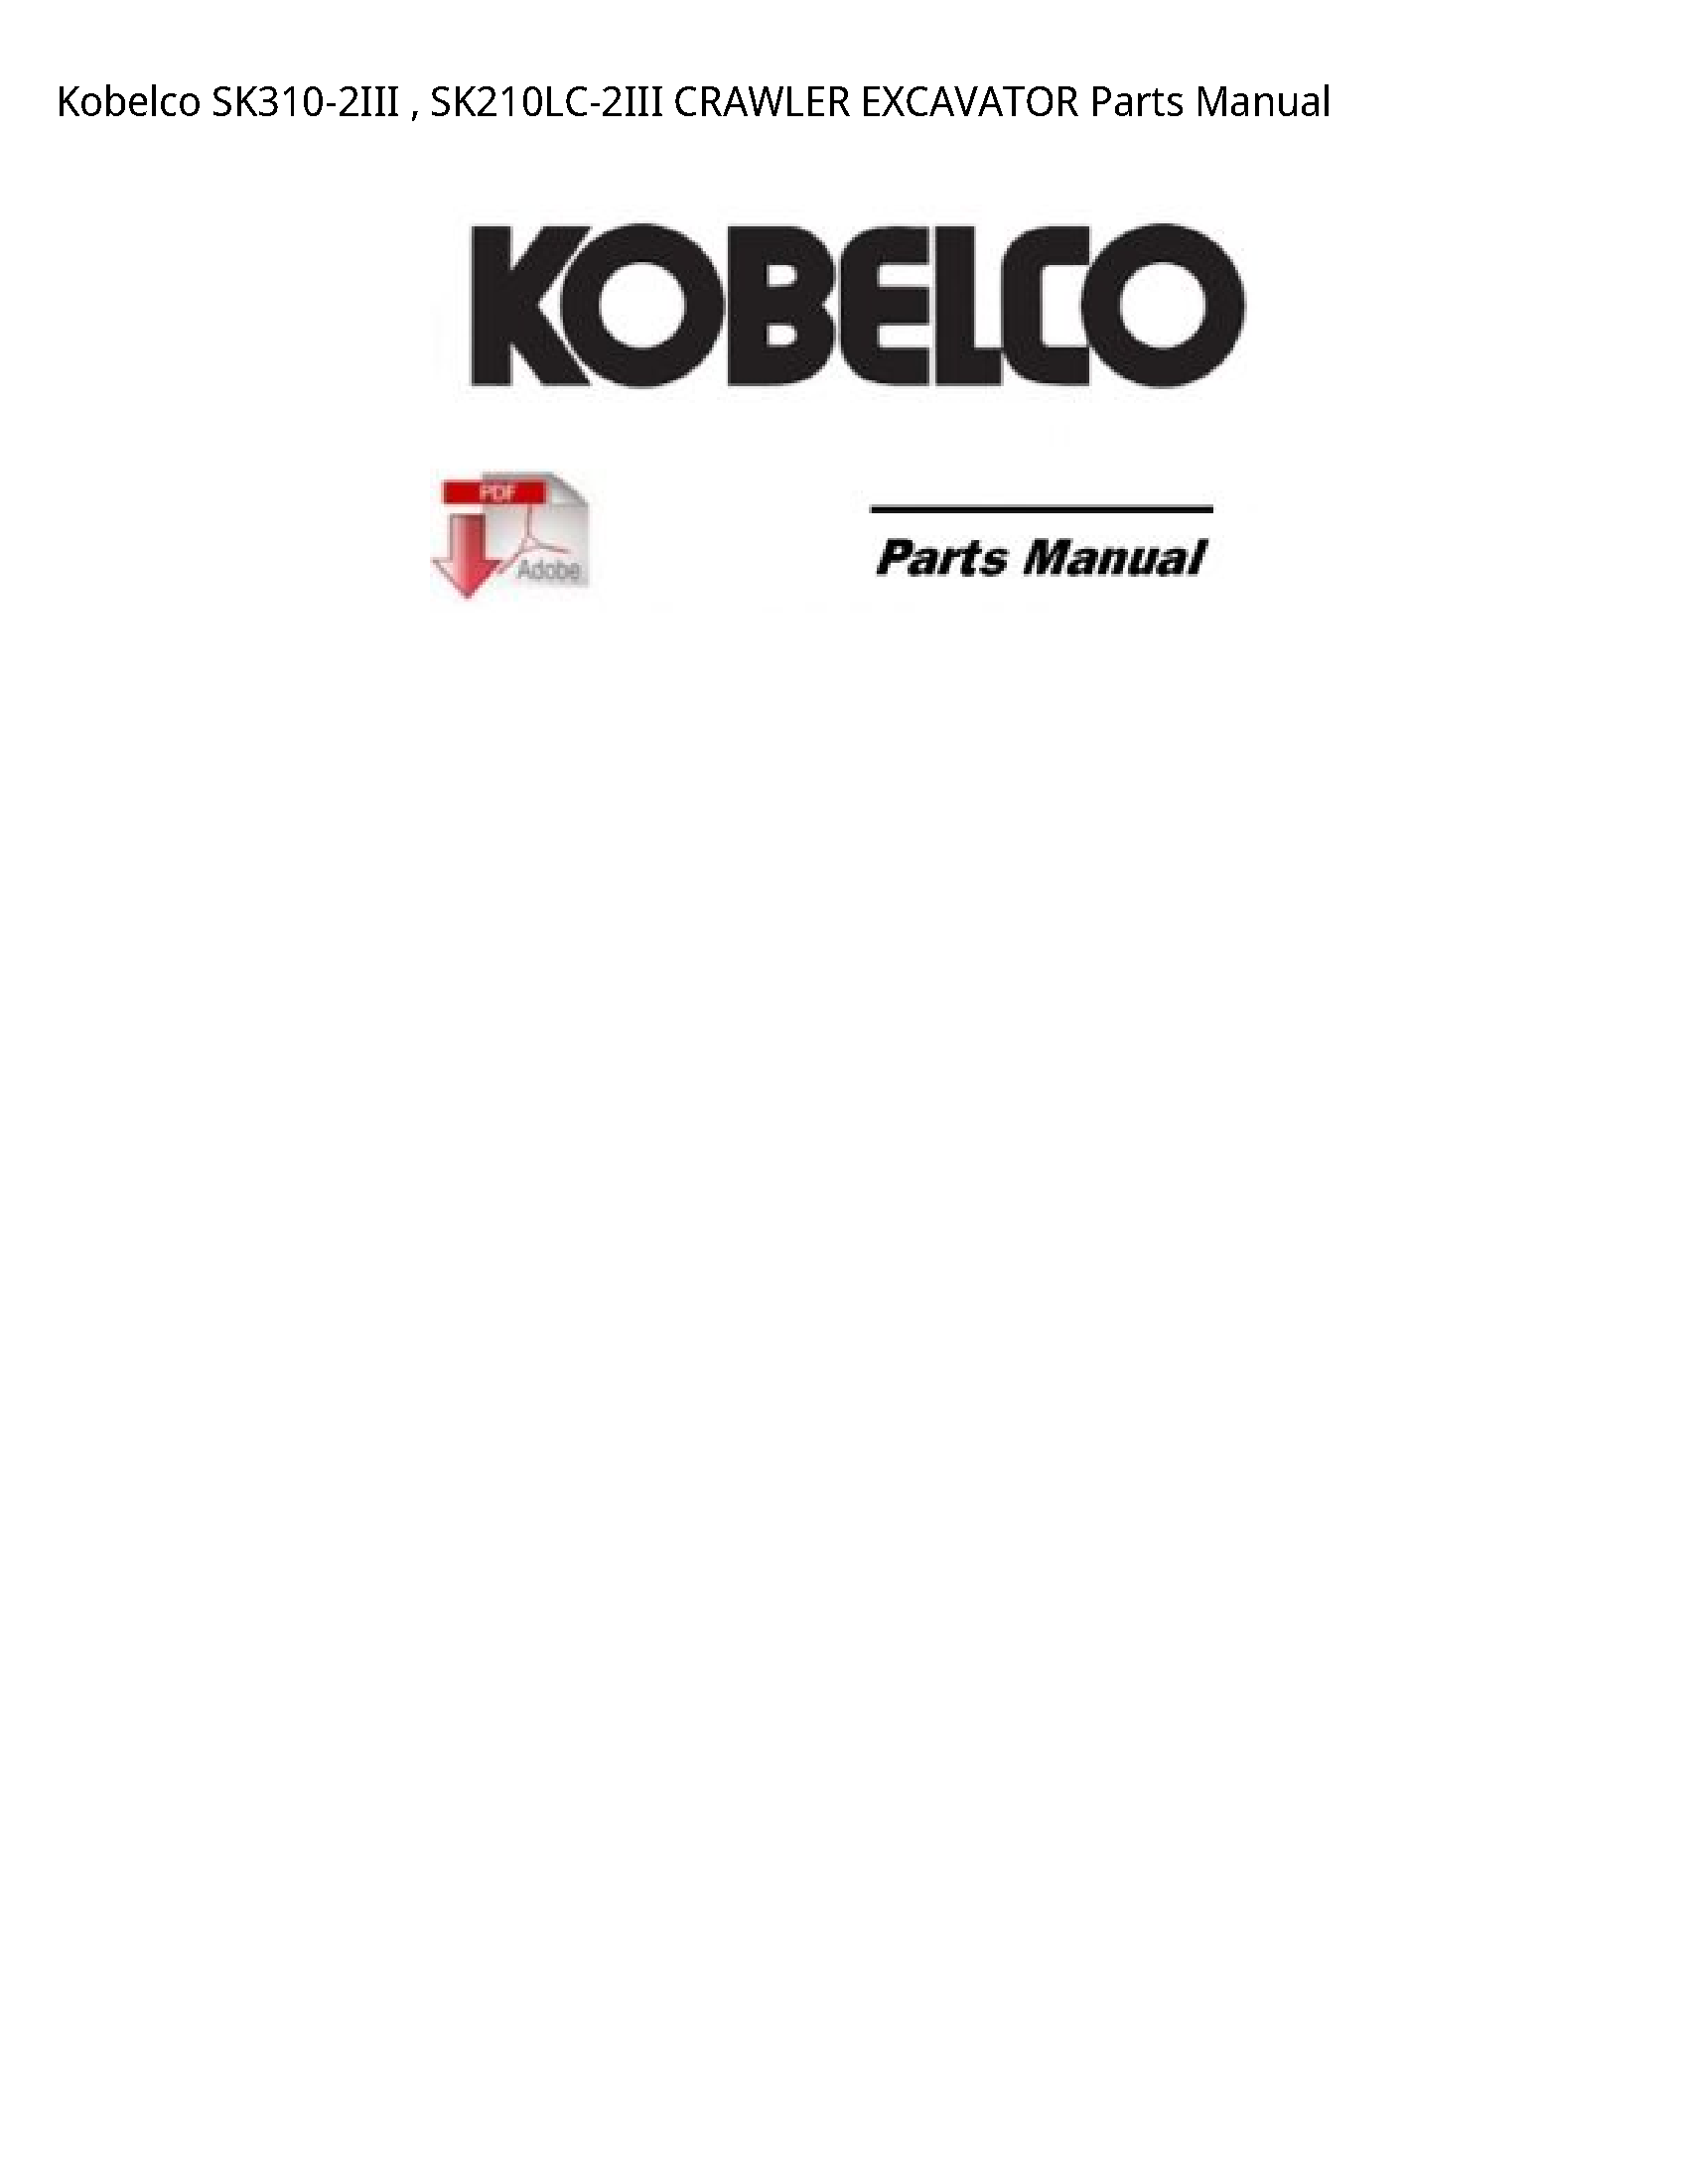 Kobelco SK310-2III CRAWLER EXCAVATOR Parts manual